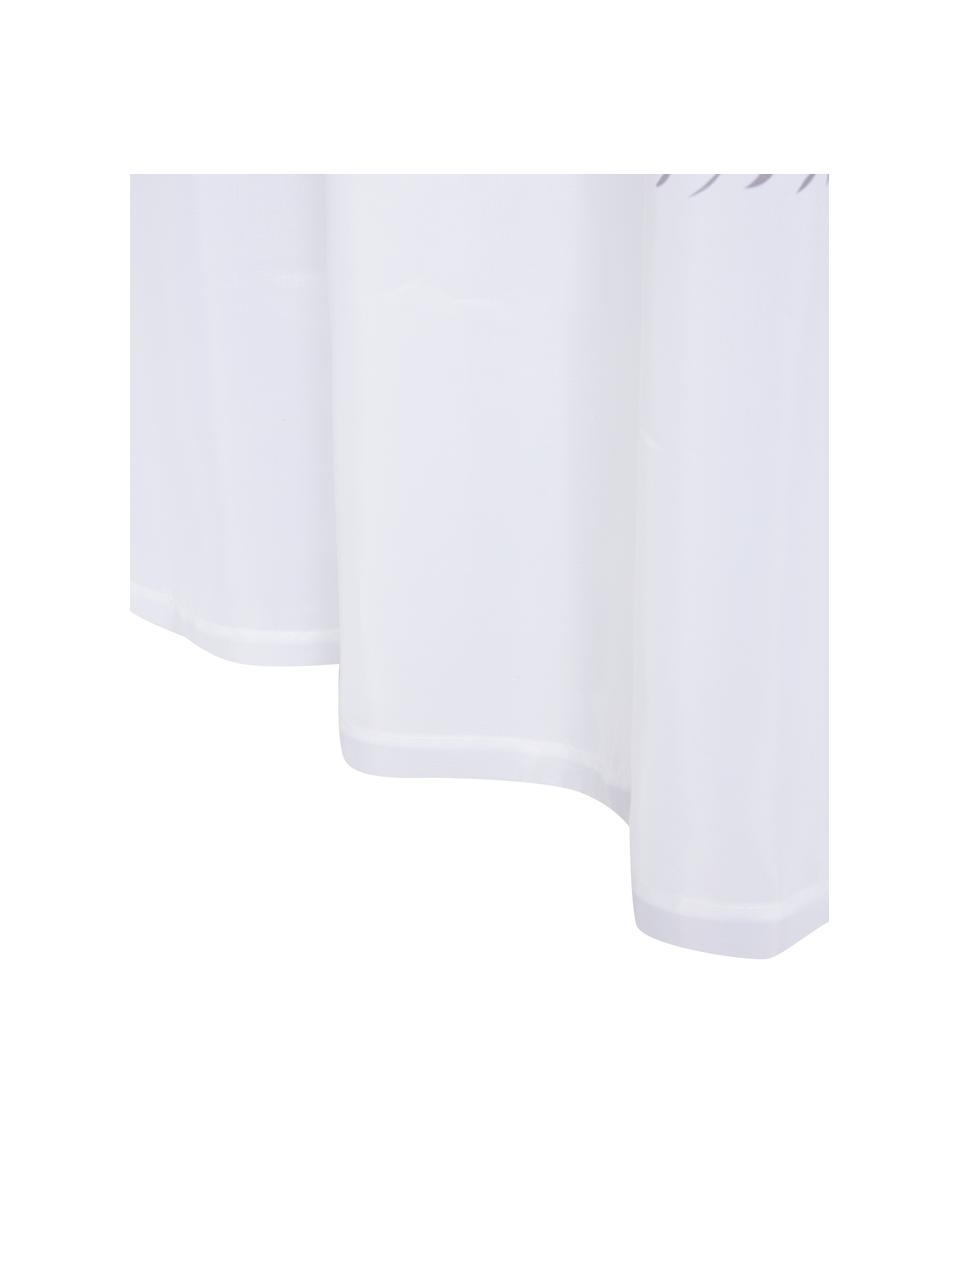 Duschvorhang Flow in Weiß, 100% Polyester, Grau, Weiß, B 180 x L 200 cm